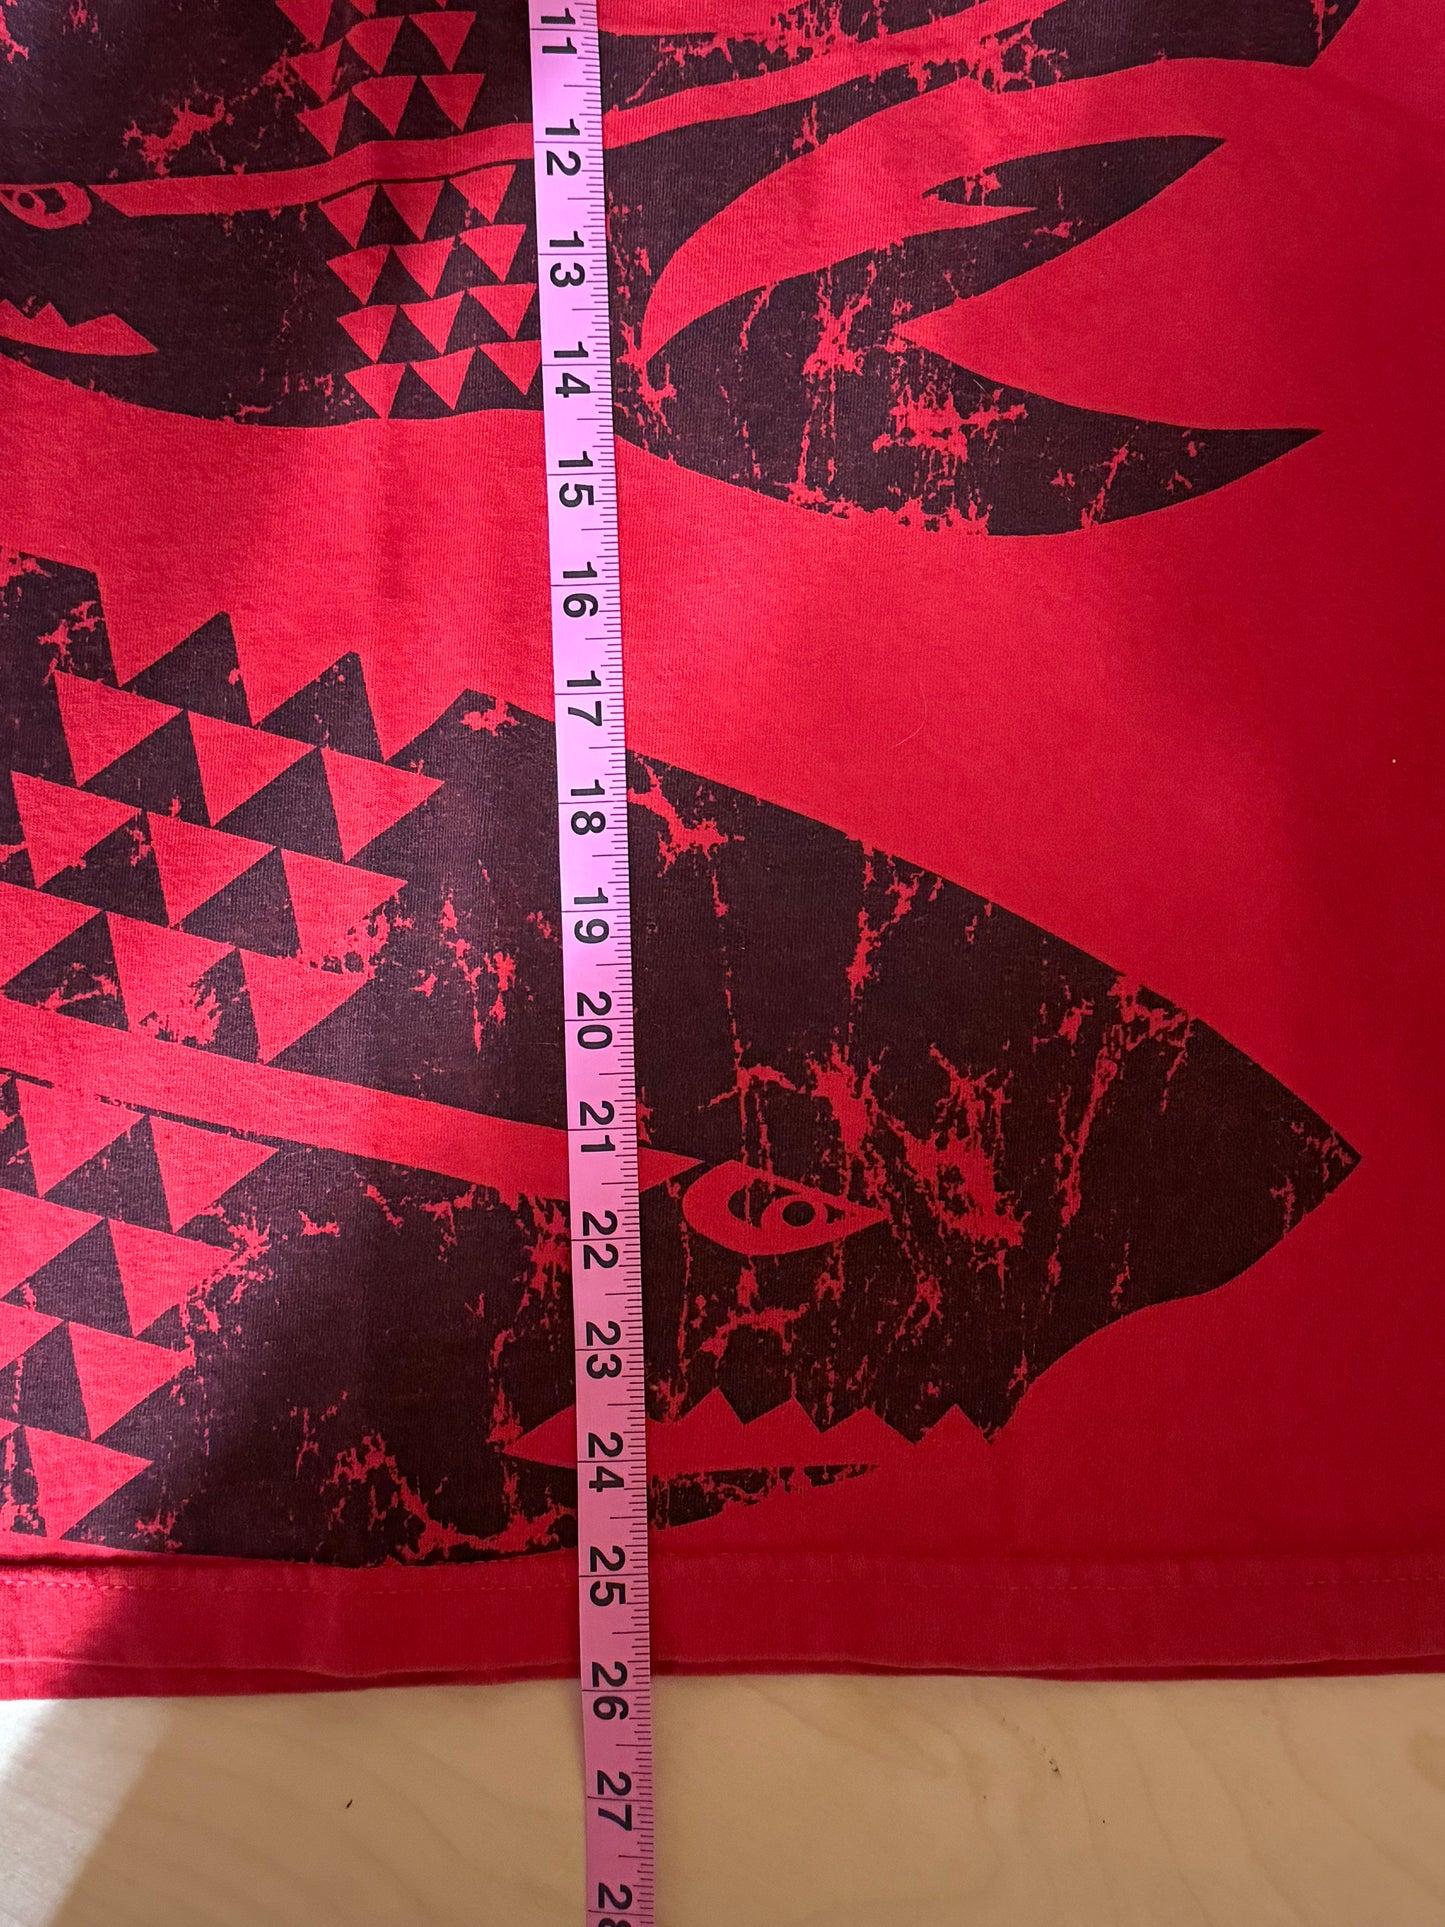 MauiBuilt Printed Men’s Short Sleeve T-Shirt Red - Size Medium